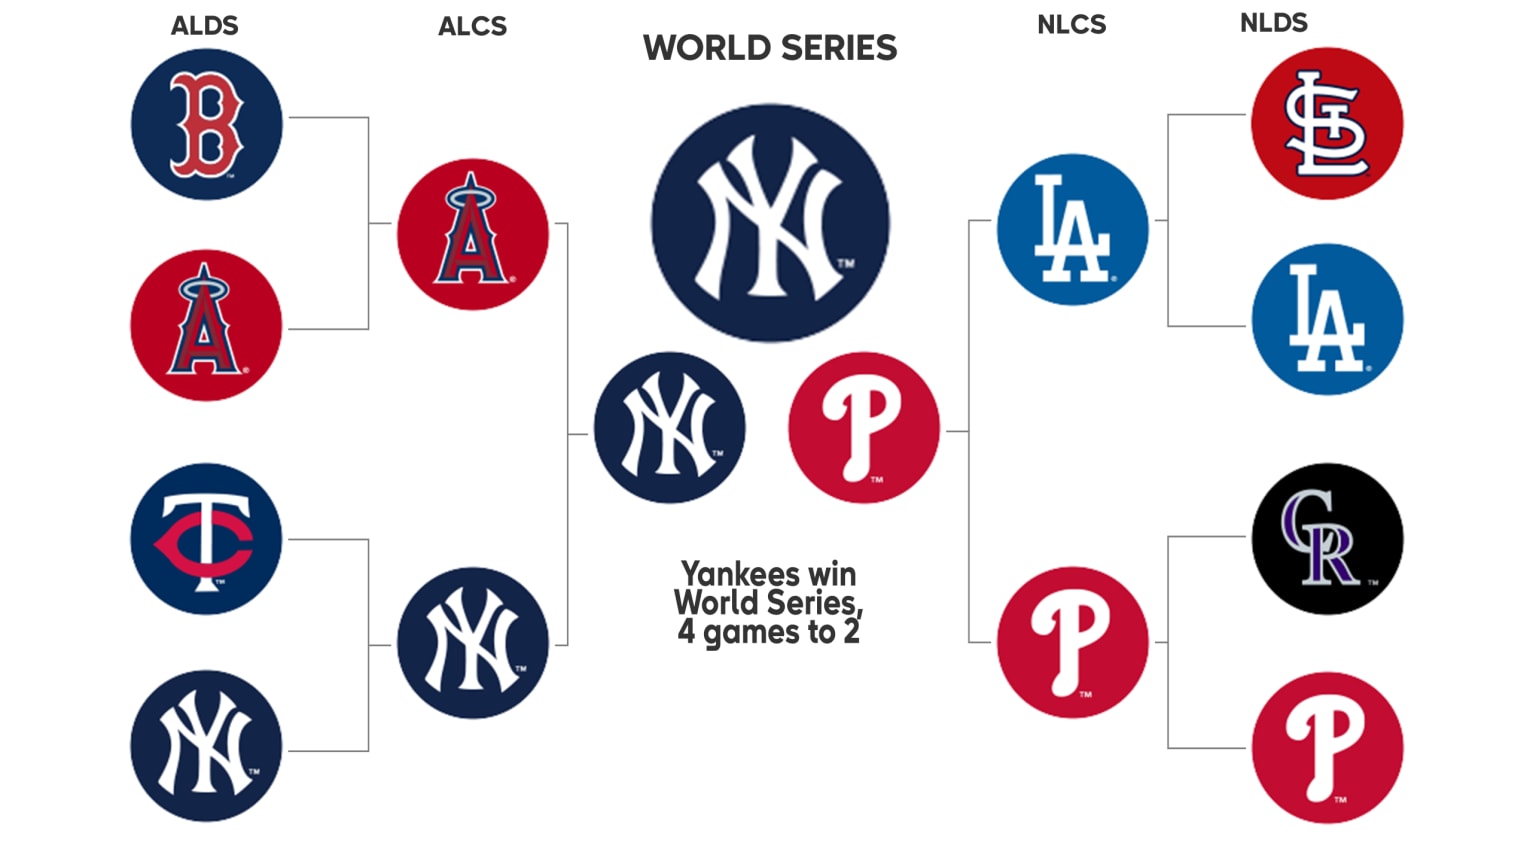 2009 World Series recap